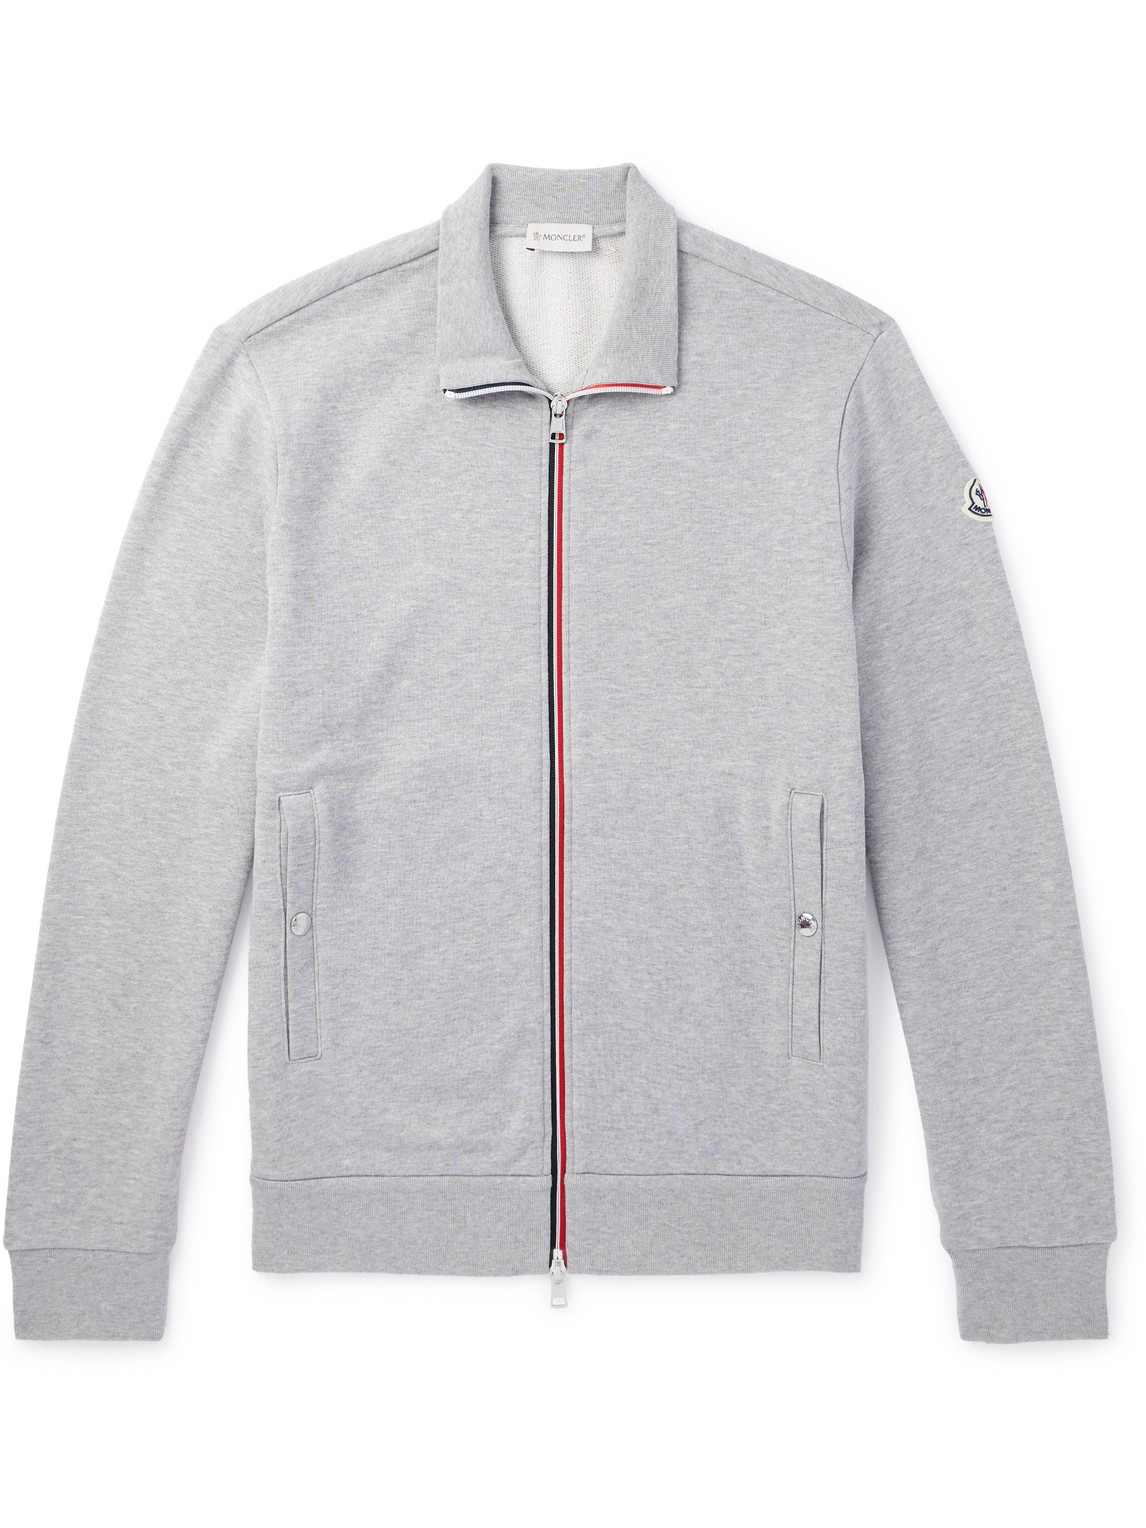 Moncler - Logo-Appliquéd Cotton-Jersey Sweatshirt - Men - Gray - M von Moncler